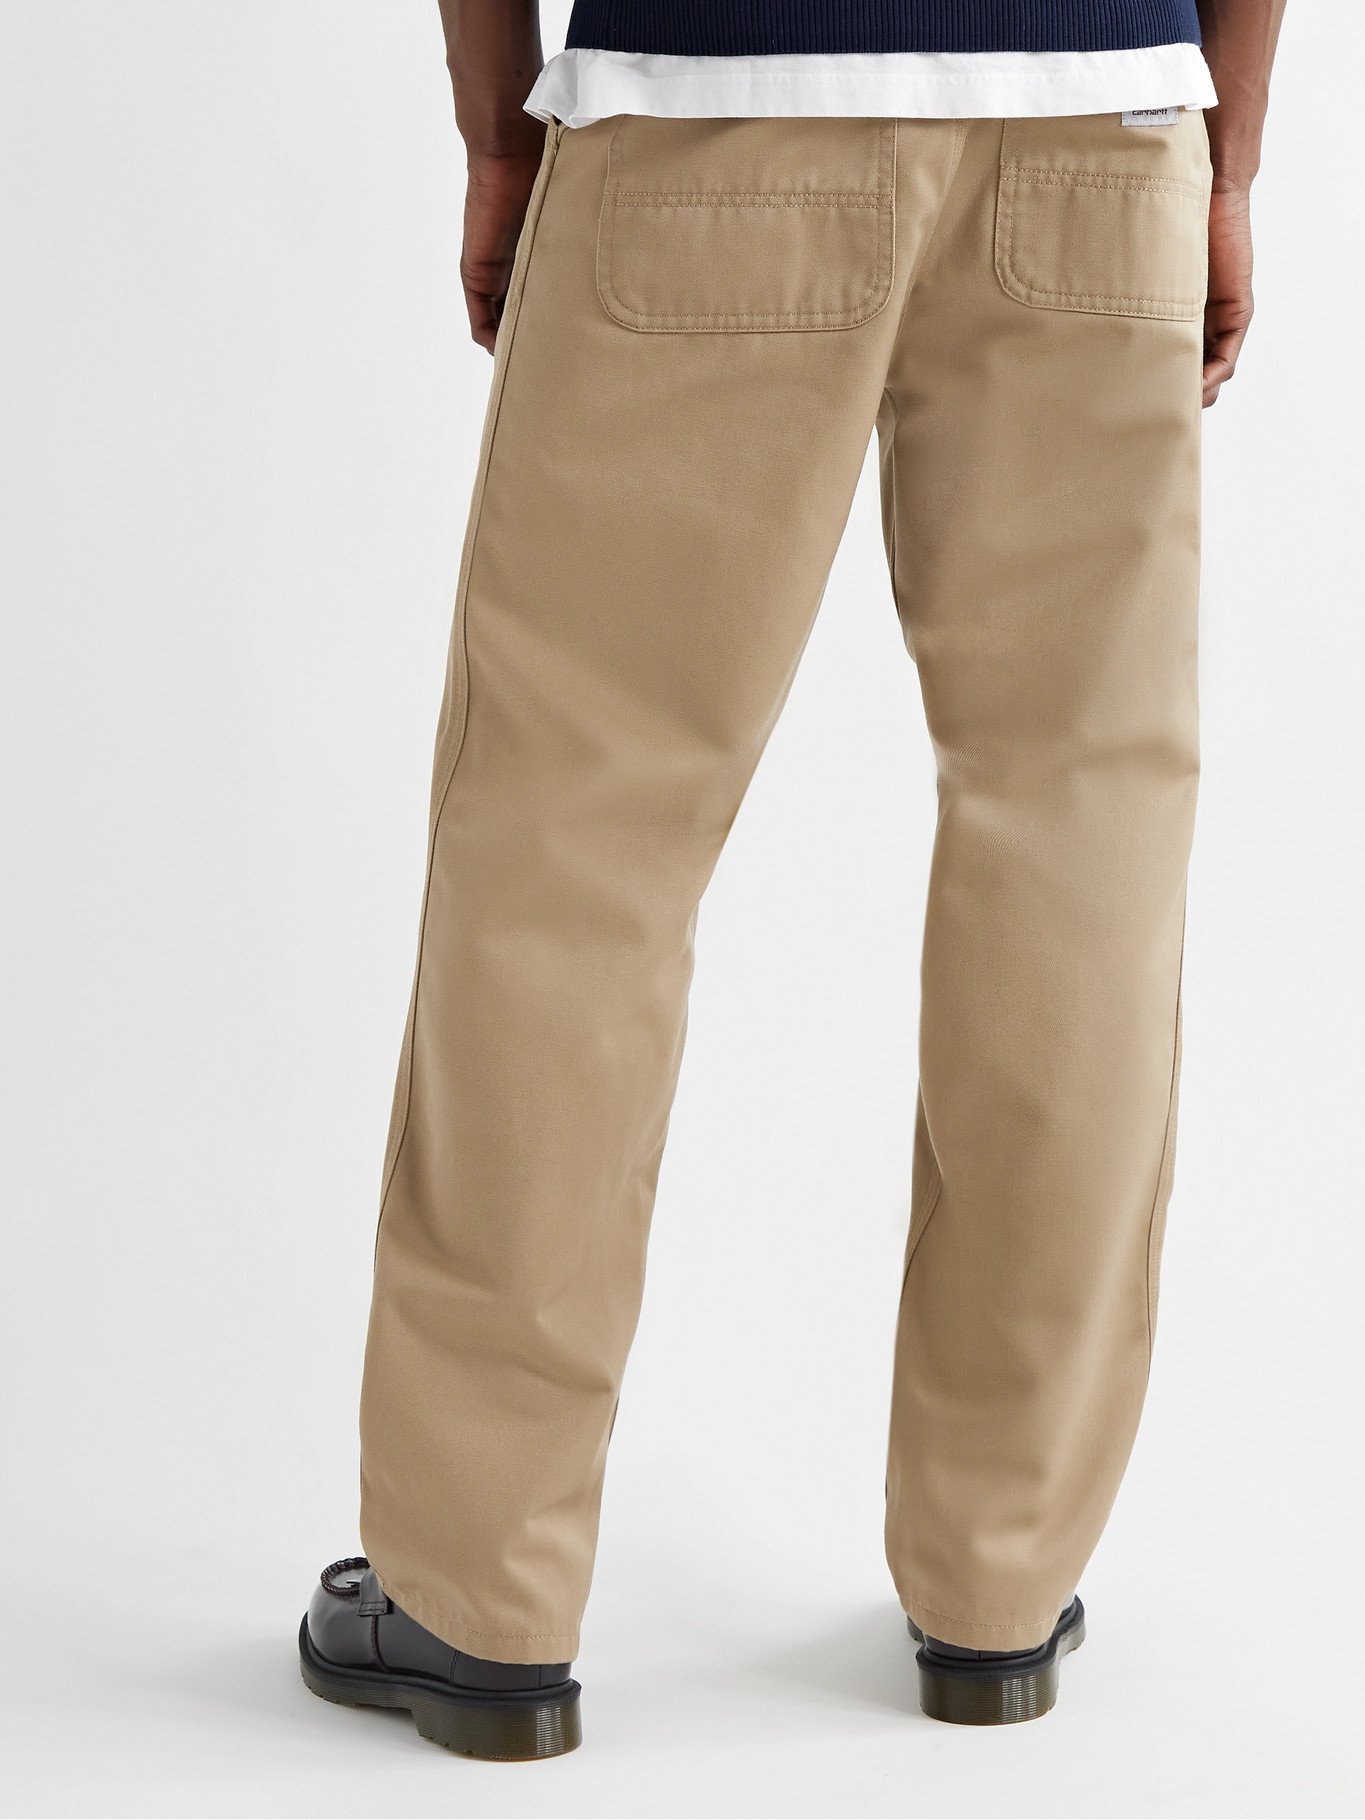 CARHARTT WIP - Simple Denison Twill Trousers - Neutrals Carhartt WIP